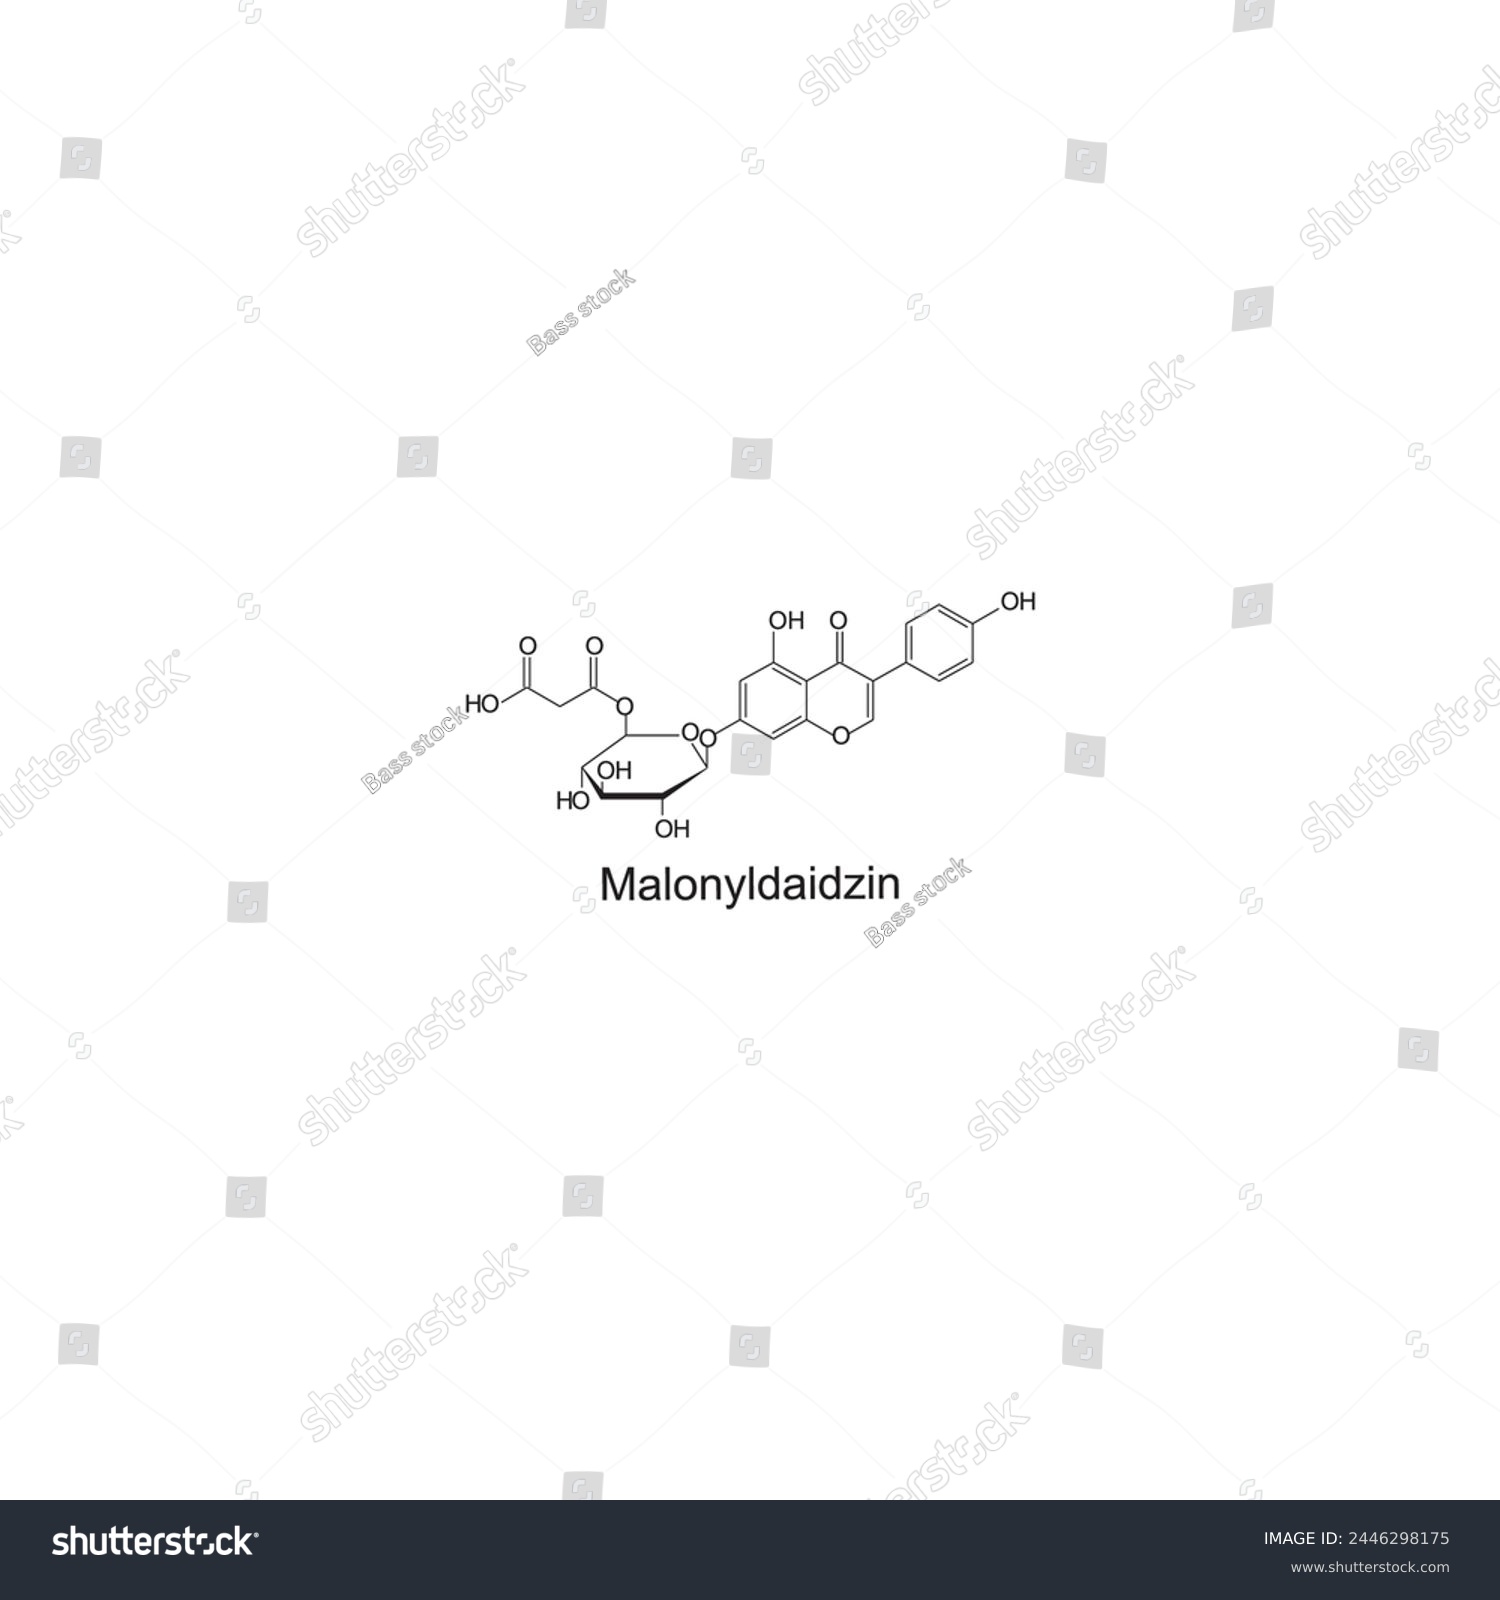 SVG of Malonylgenistin skeletal structure diagram.Isoflavanone compound molecule scientific illustration on white background. svg